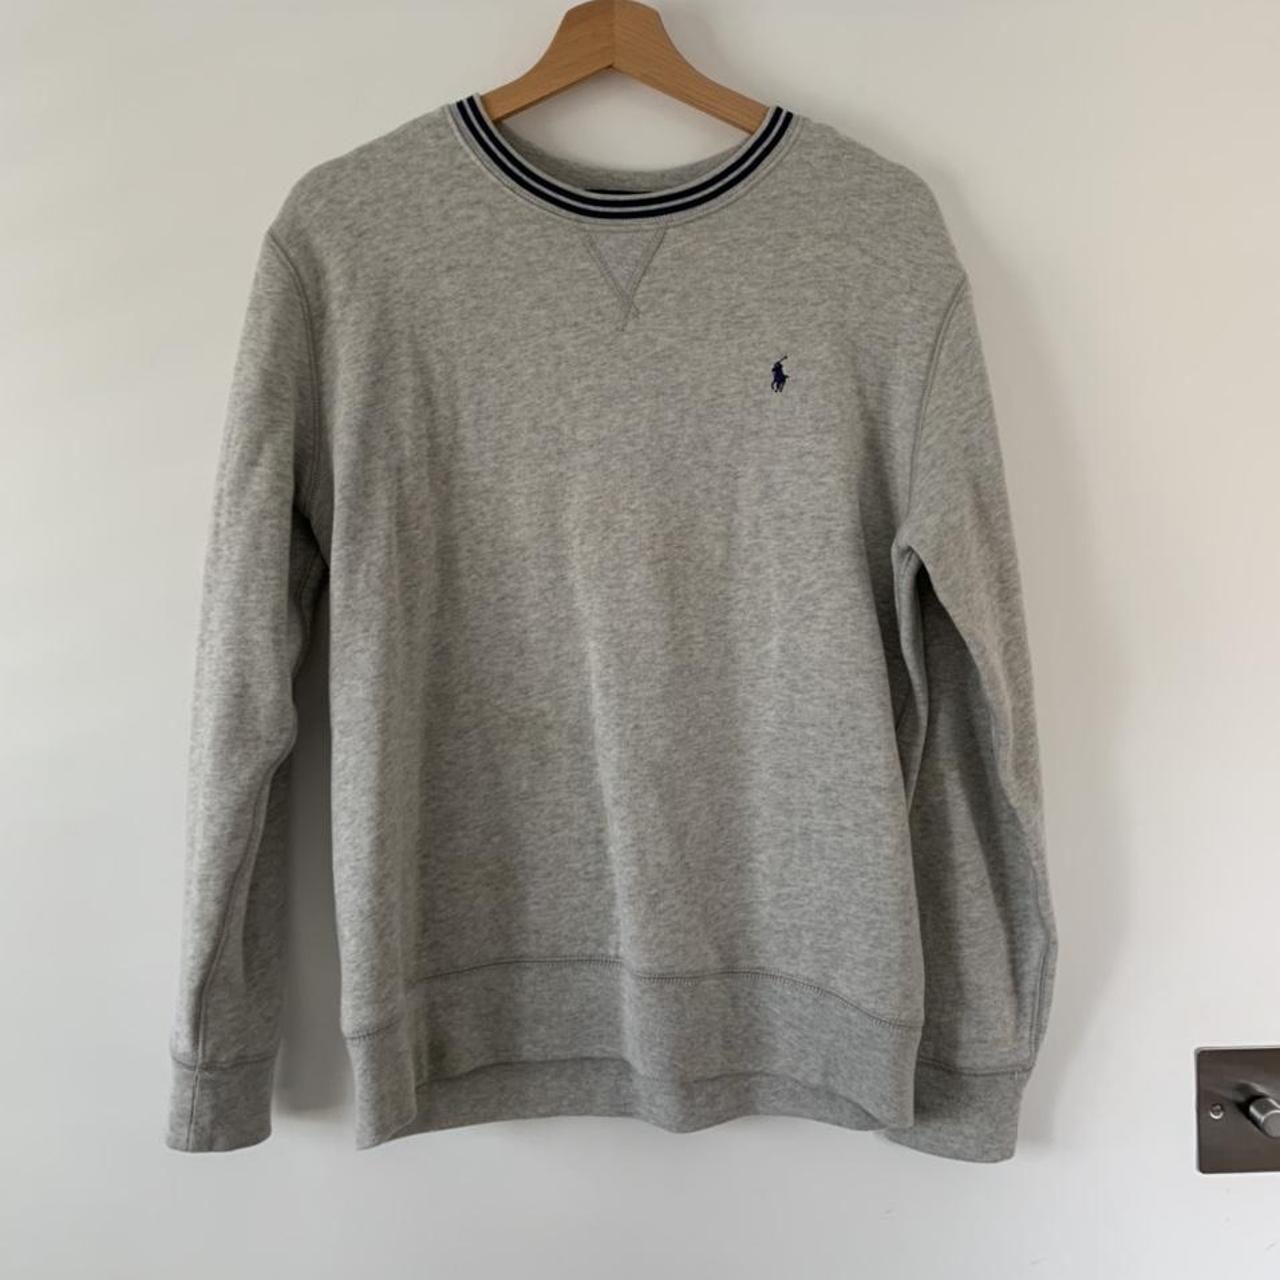 Boys large grey Ralph Lauren sweater Would easily... - Depop